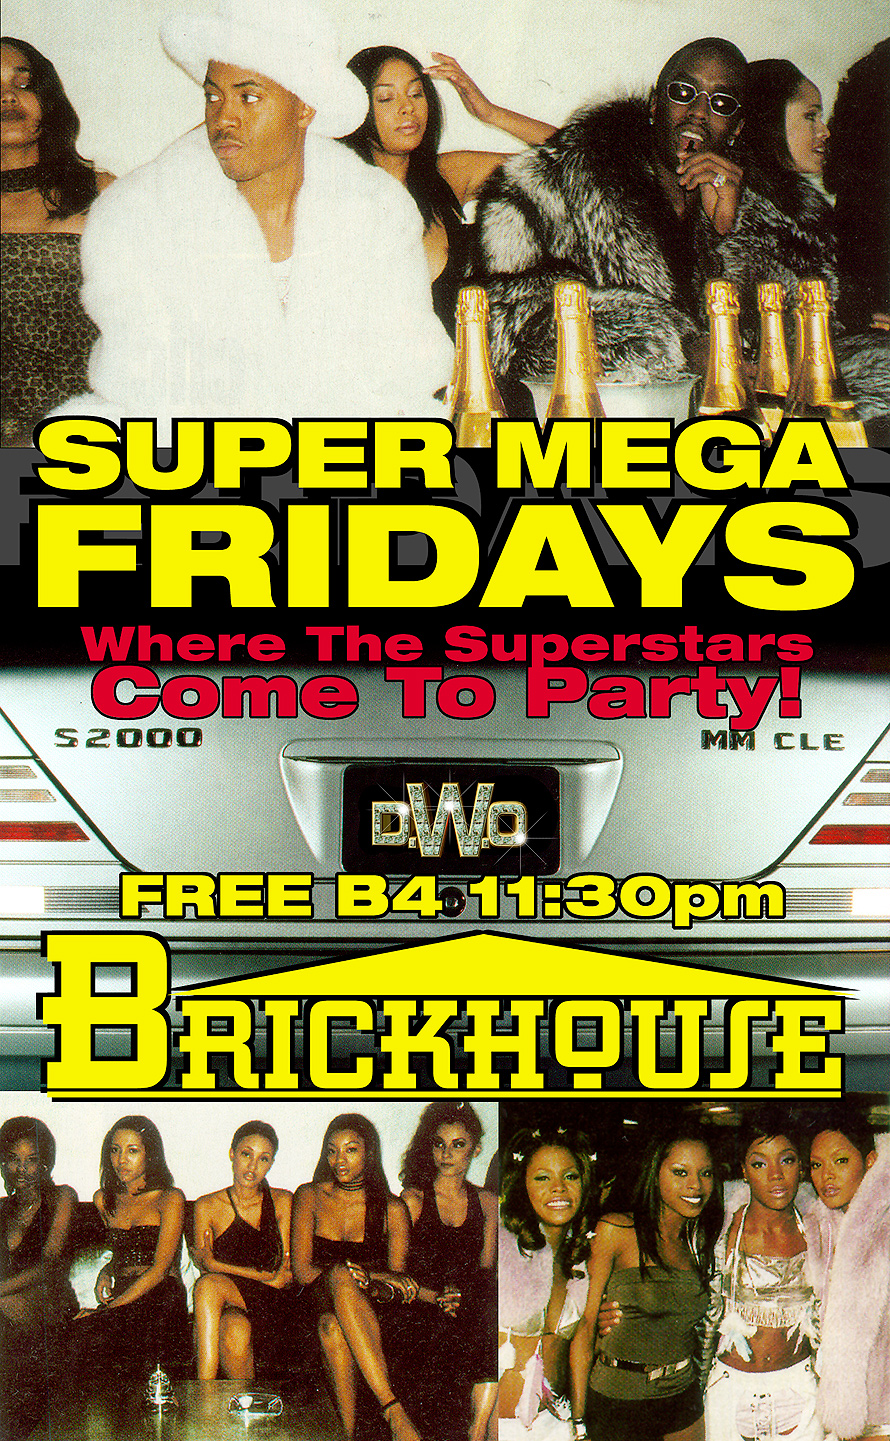 Super Mega Fridays at Brickhouse with Tyrese